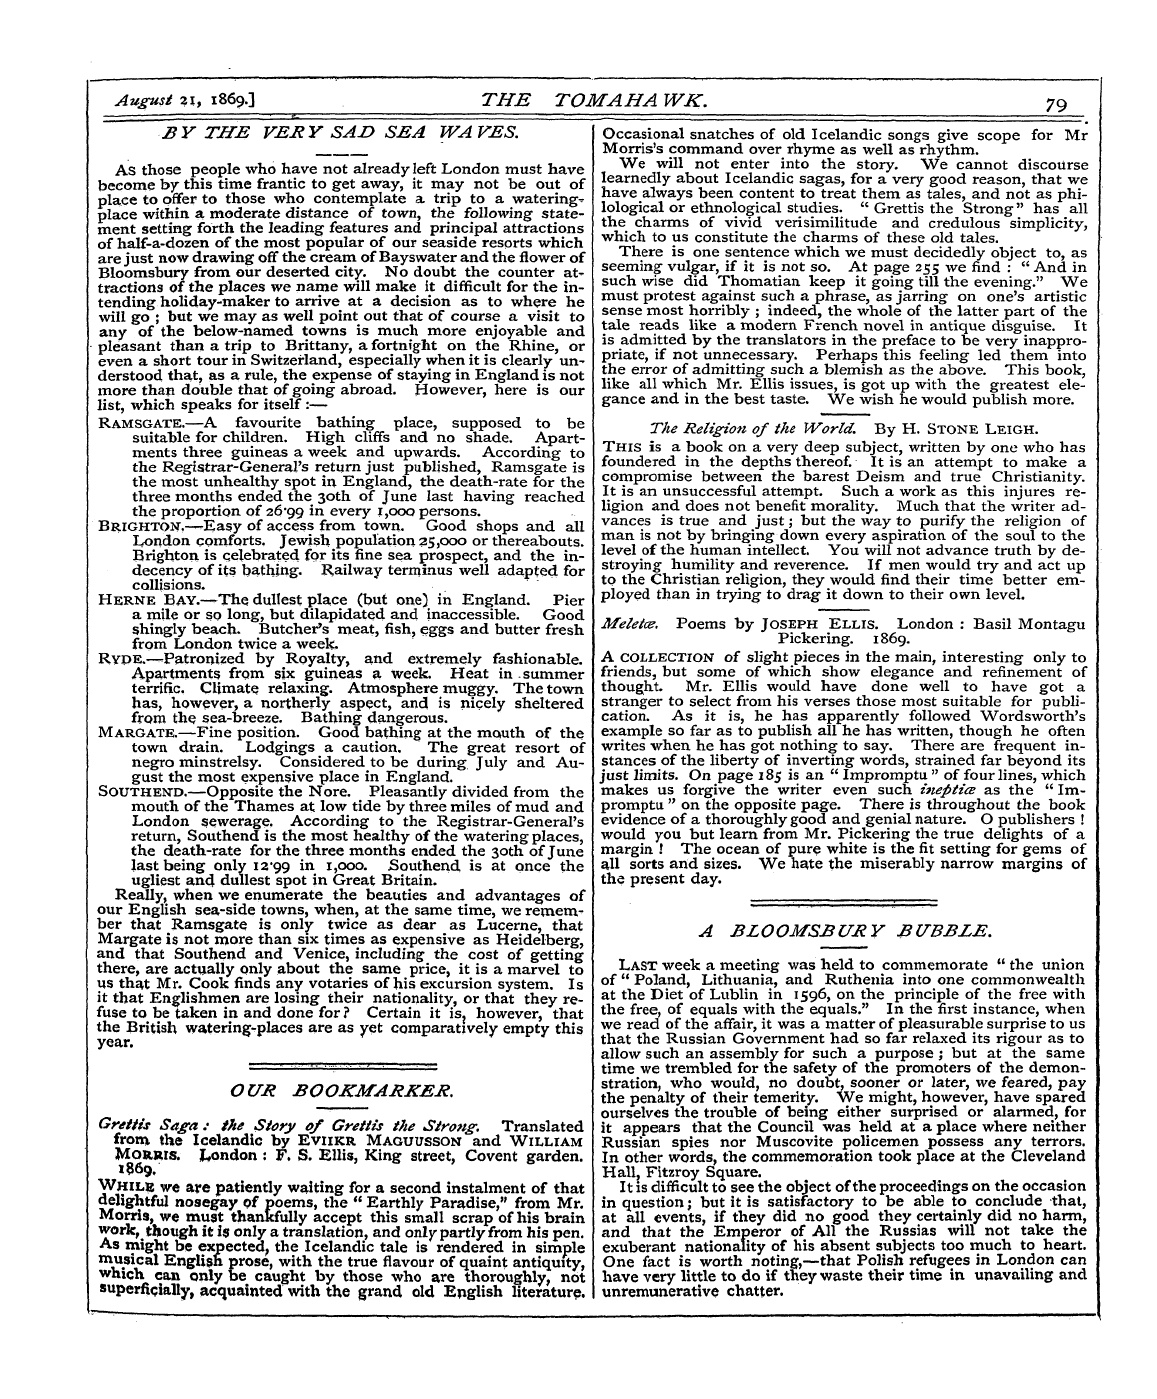 Tomahawk (1867-1870): jS F Y, 1st edition: 5